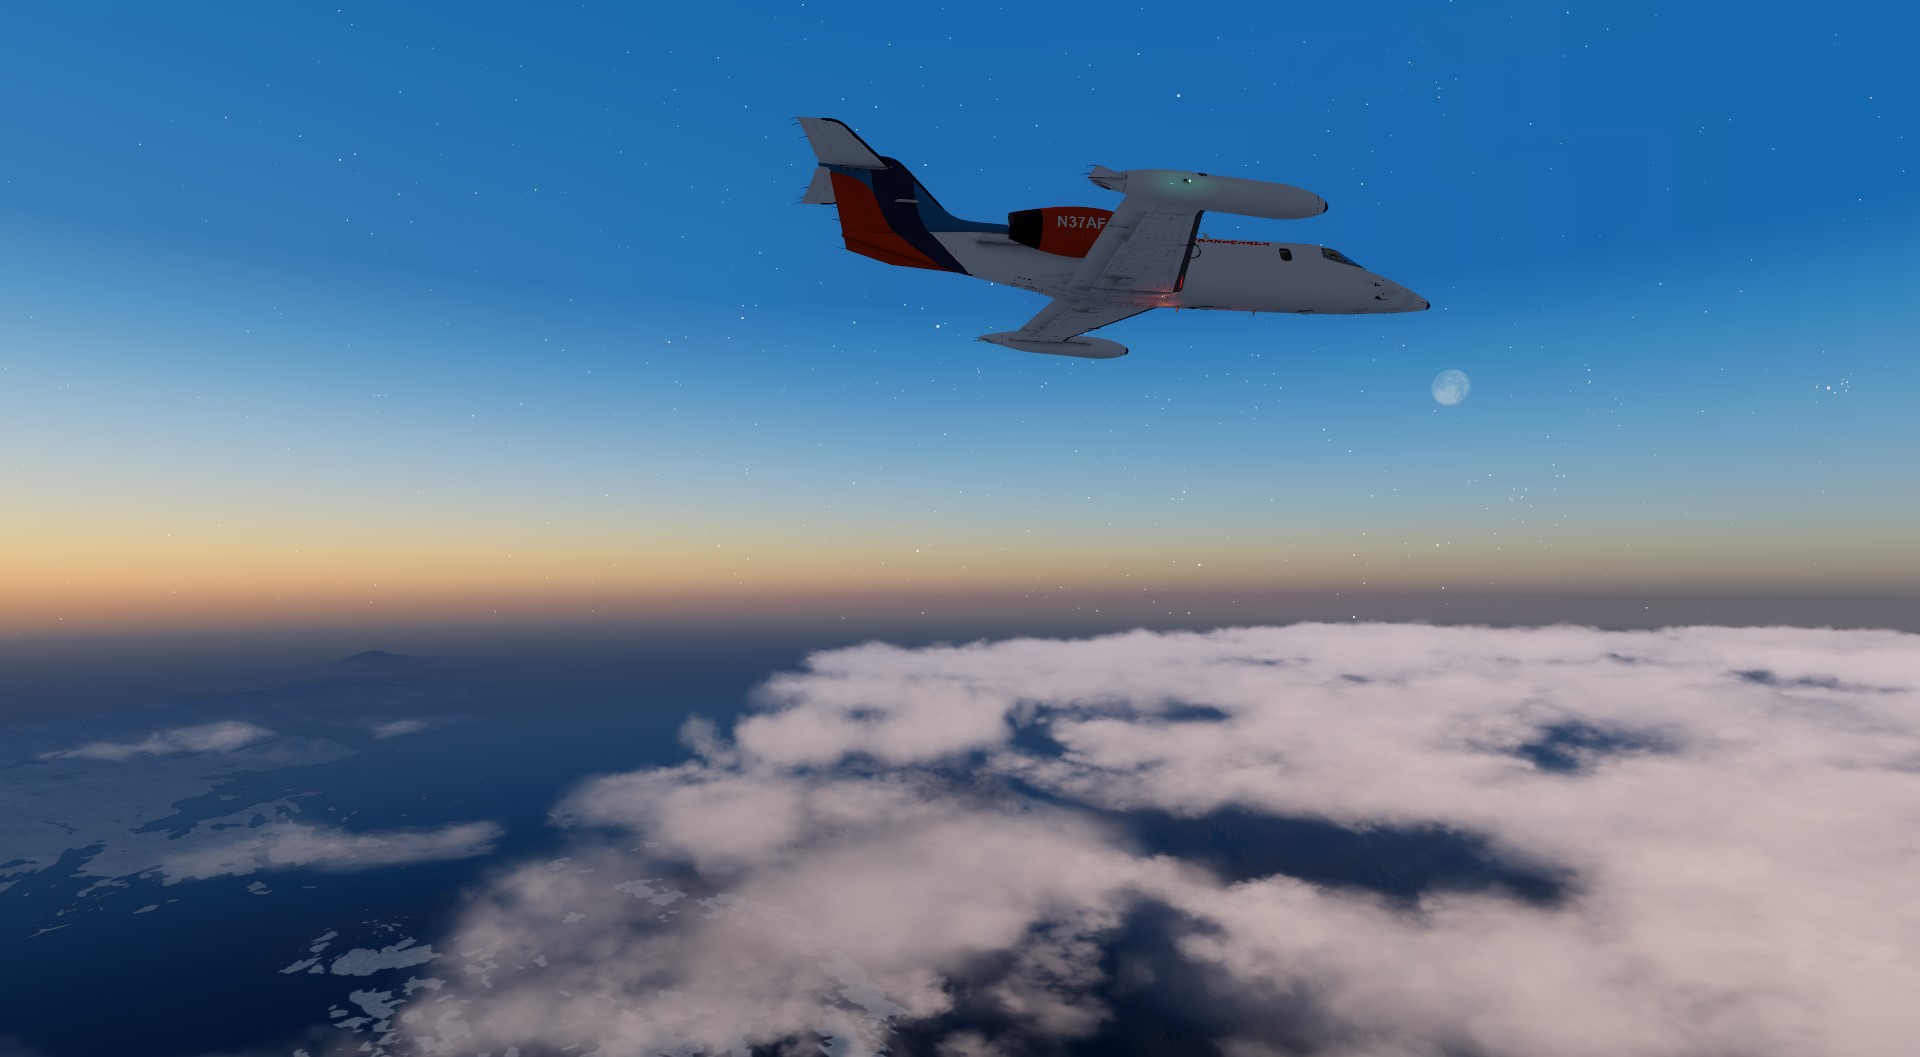 Flysimware – Learjet 35A 评测与冰岛送货之旅-6508 